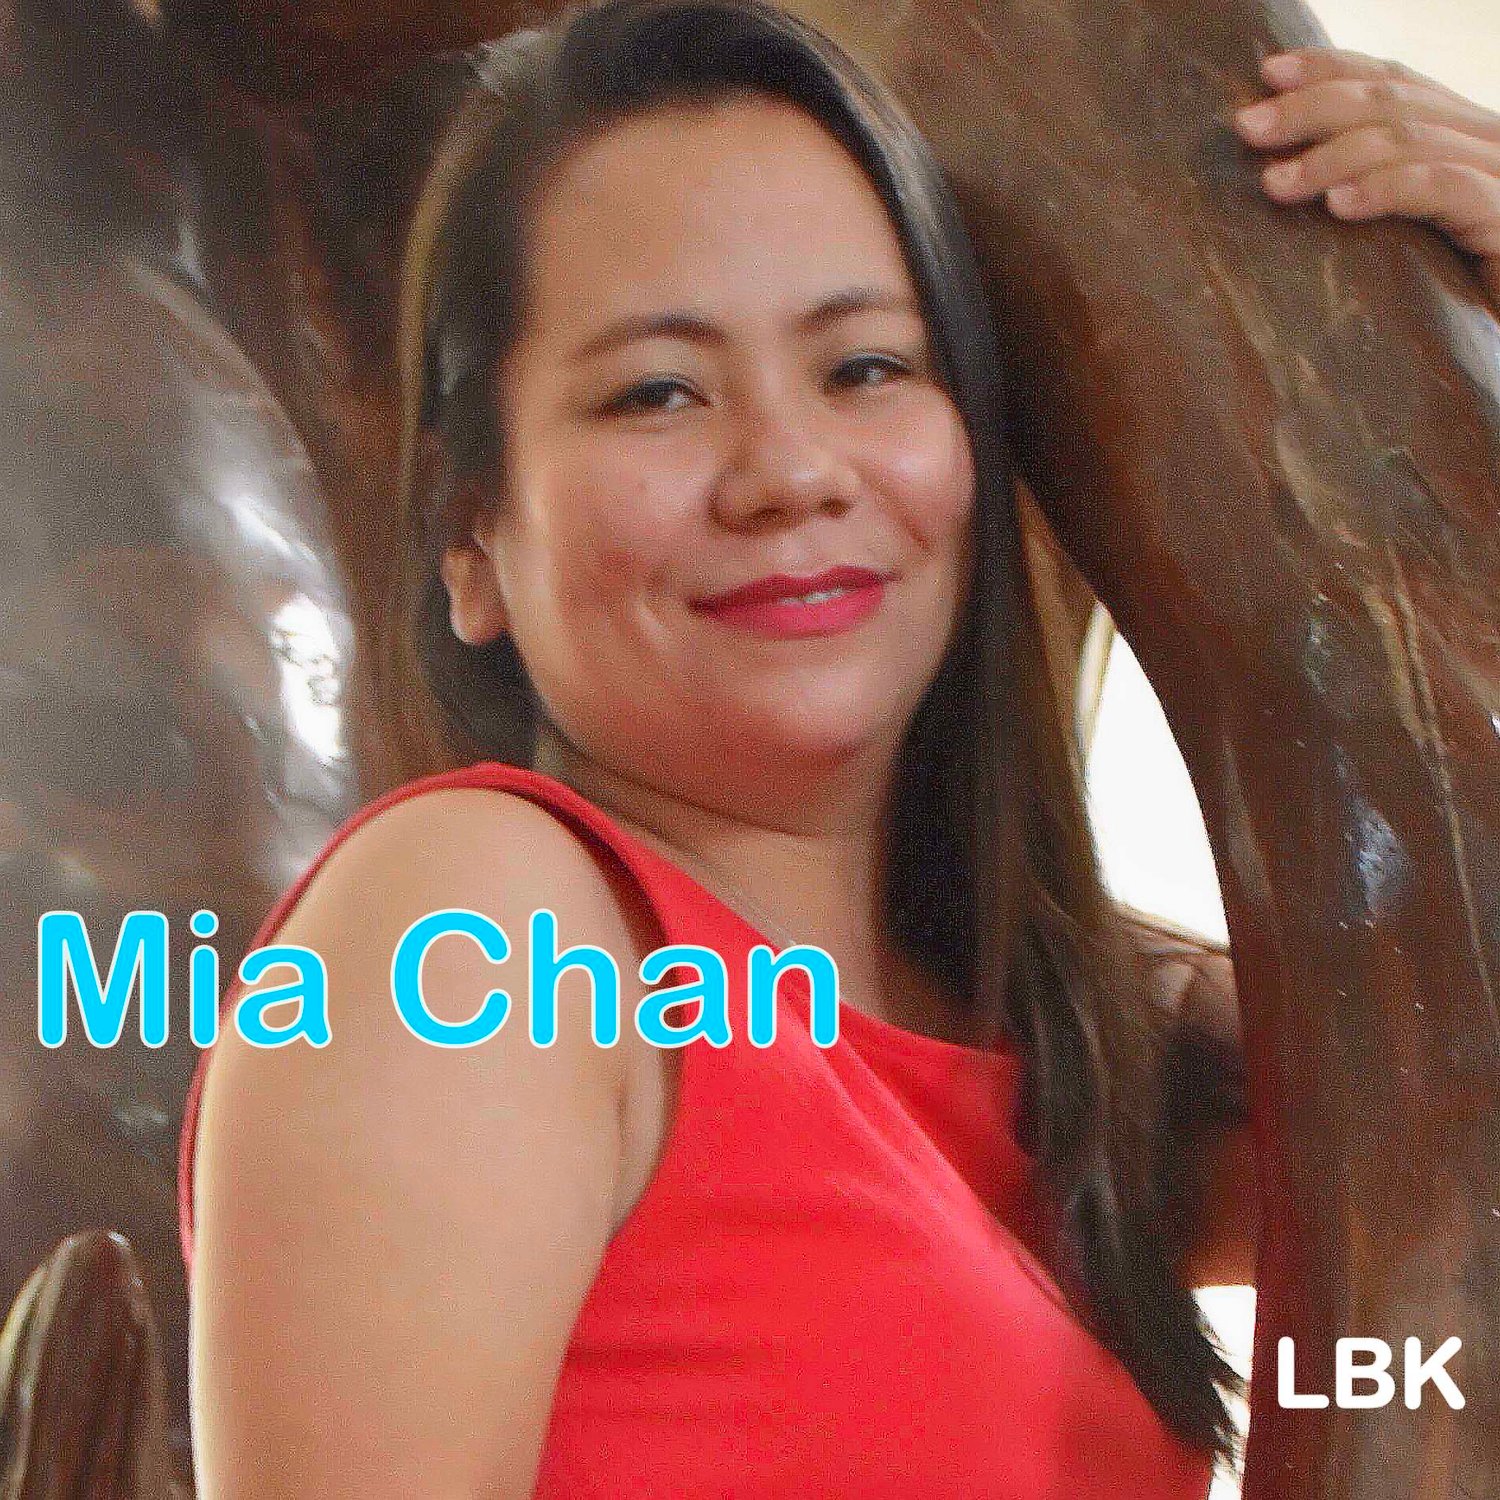 Mia Chan LBK amputee